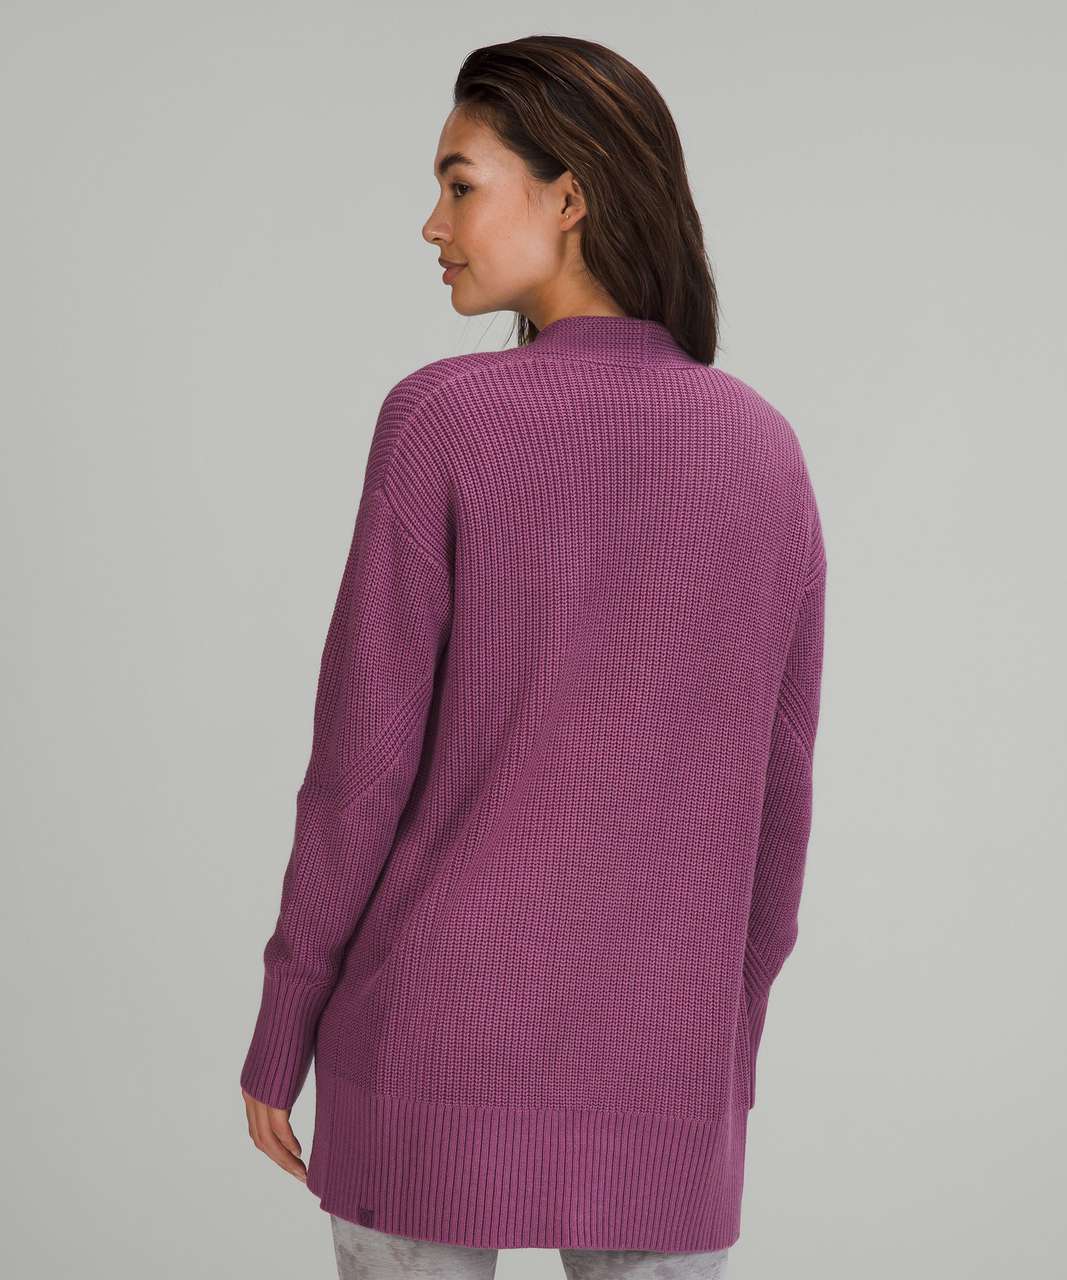 Lululemon Cashlu Sweater Wrap - Vintage Plum